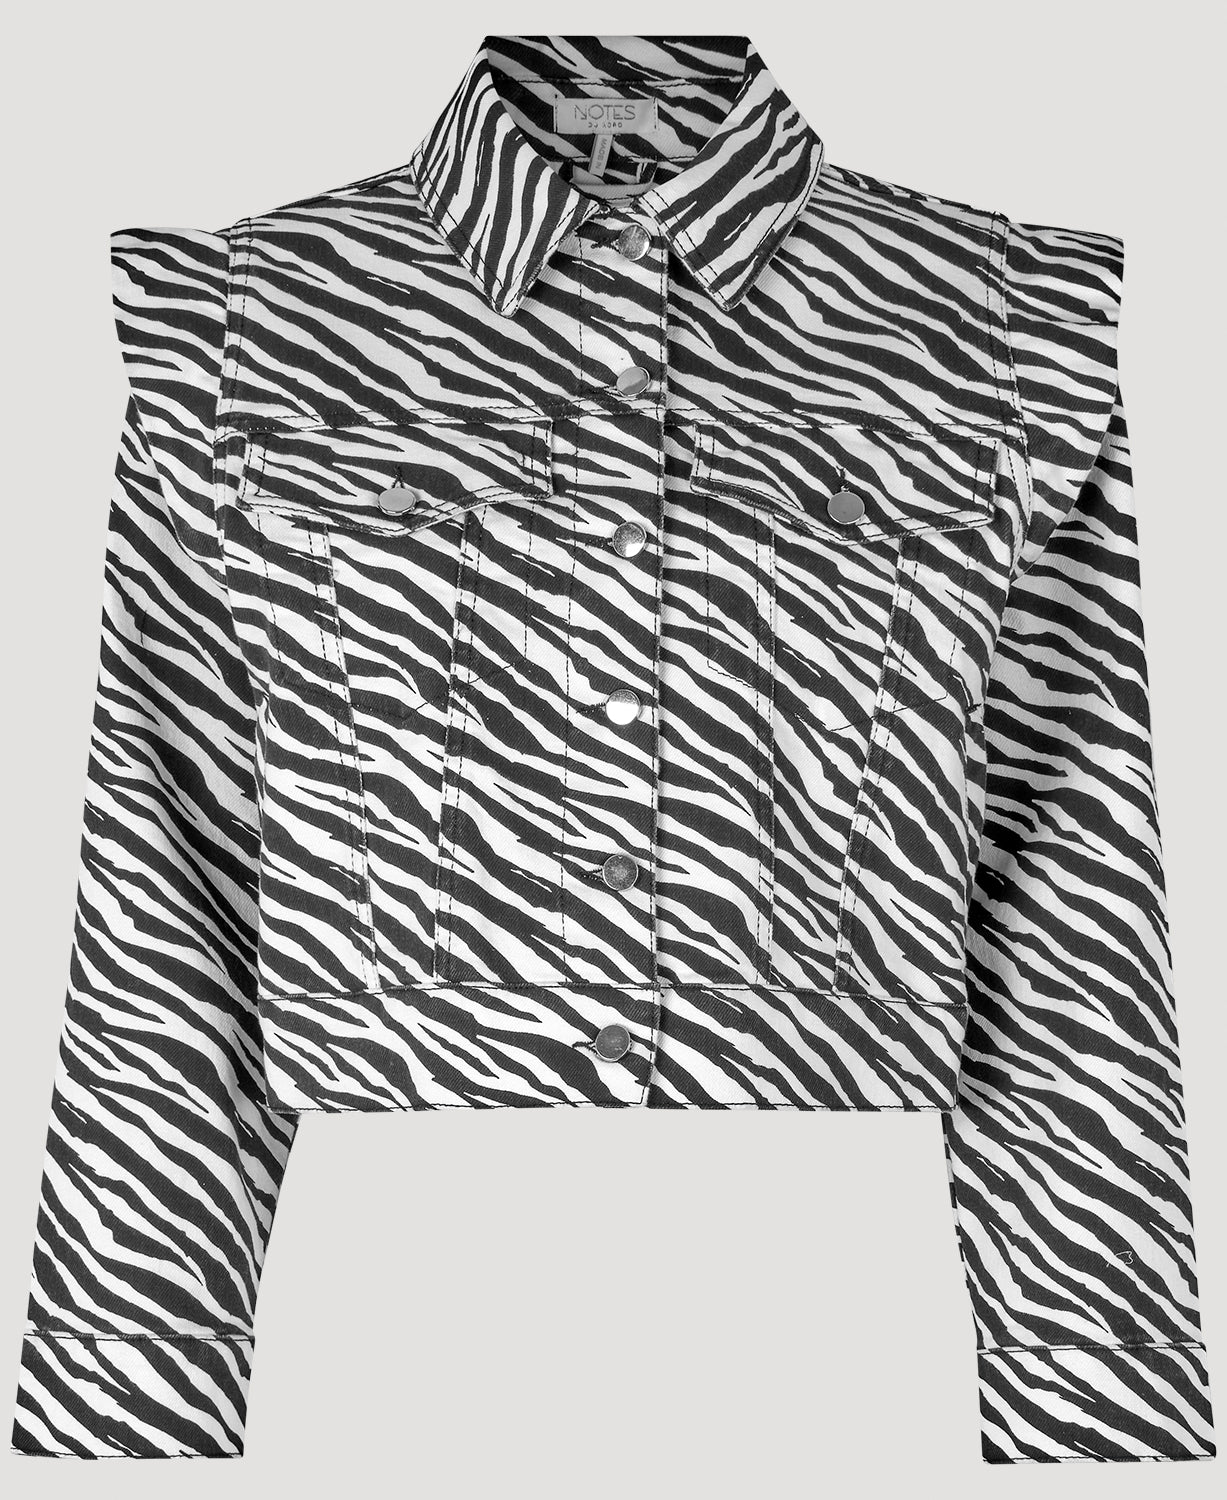 Notes du Nord Gia Denim Jacket Jacket 913 Zebra